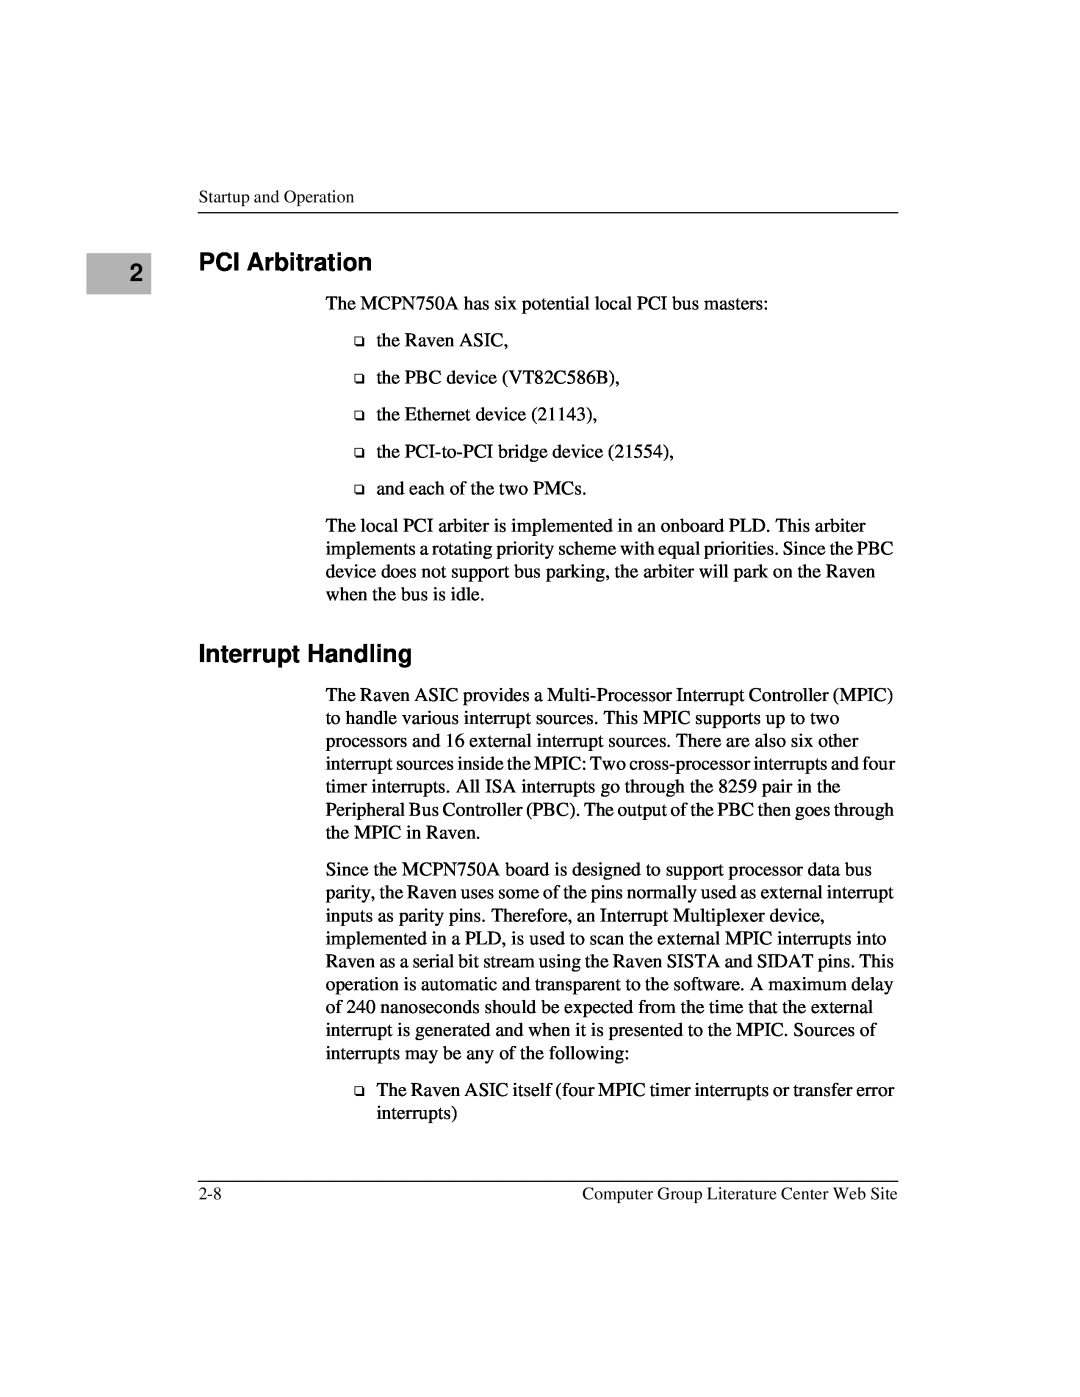 Motorola MCPN750A, IH5 manual PCI Arbitration, Interrupt Handling 